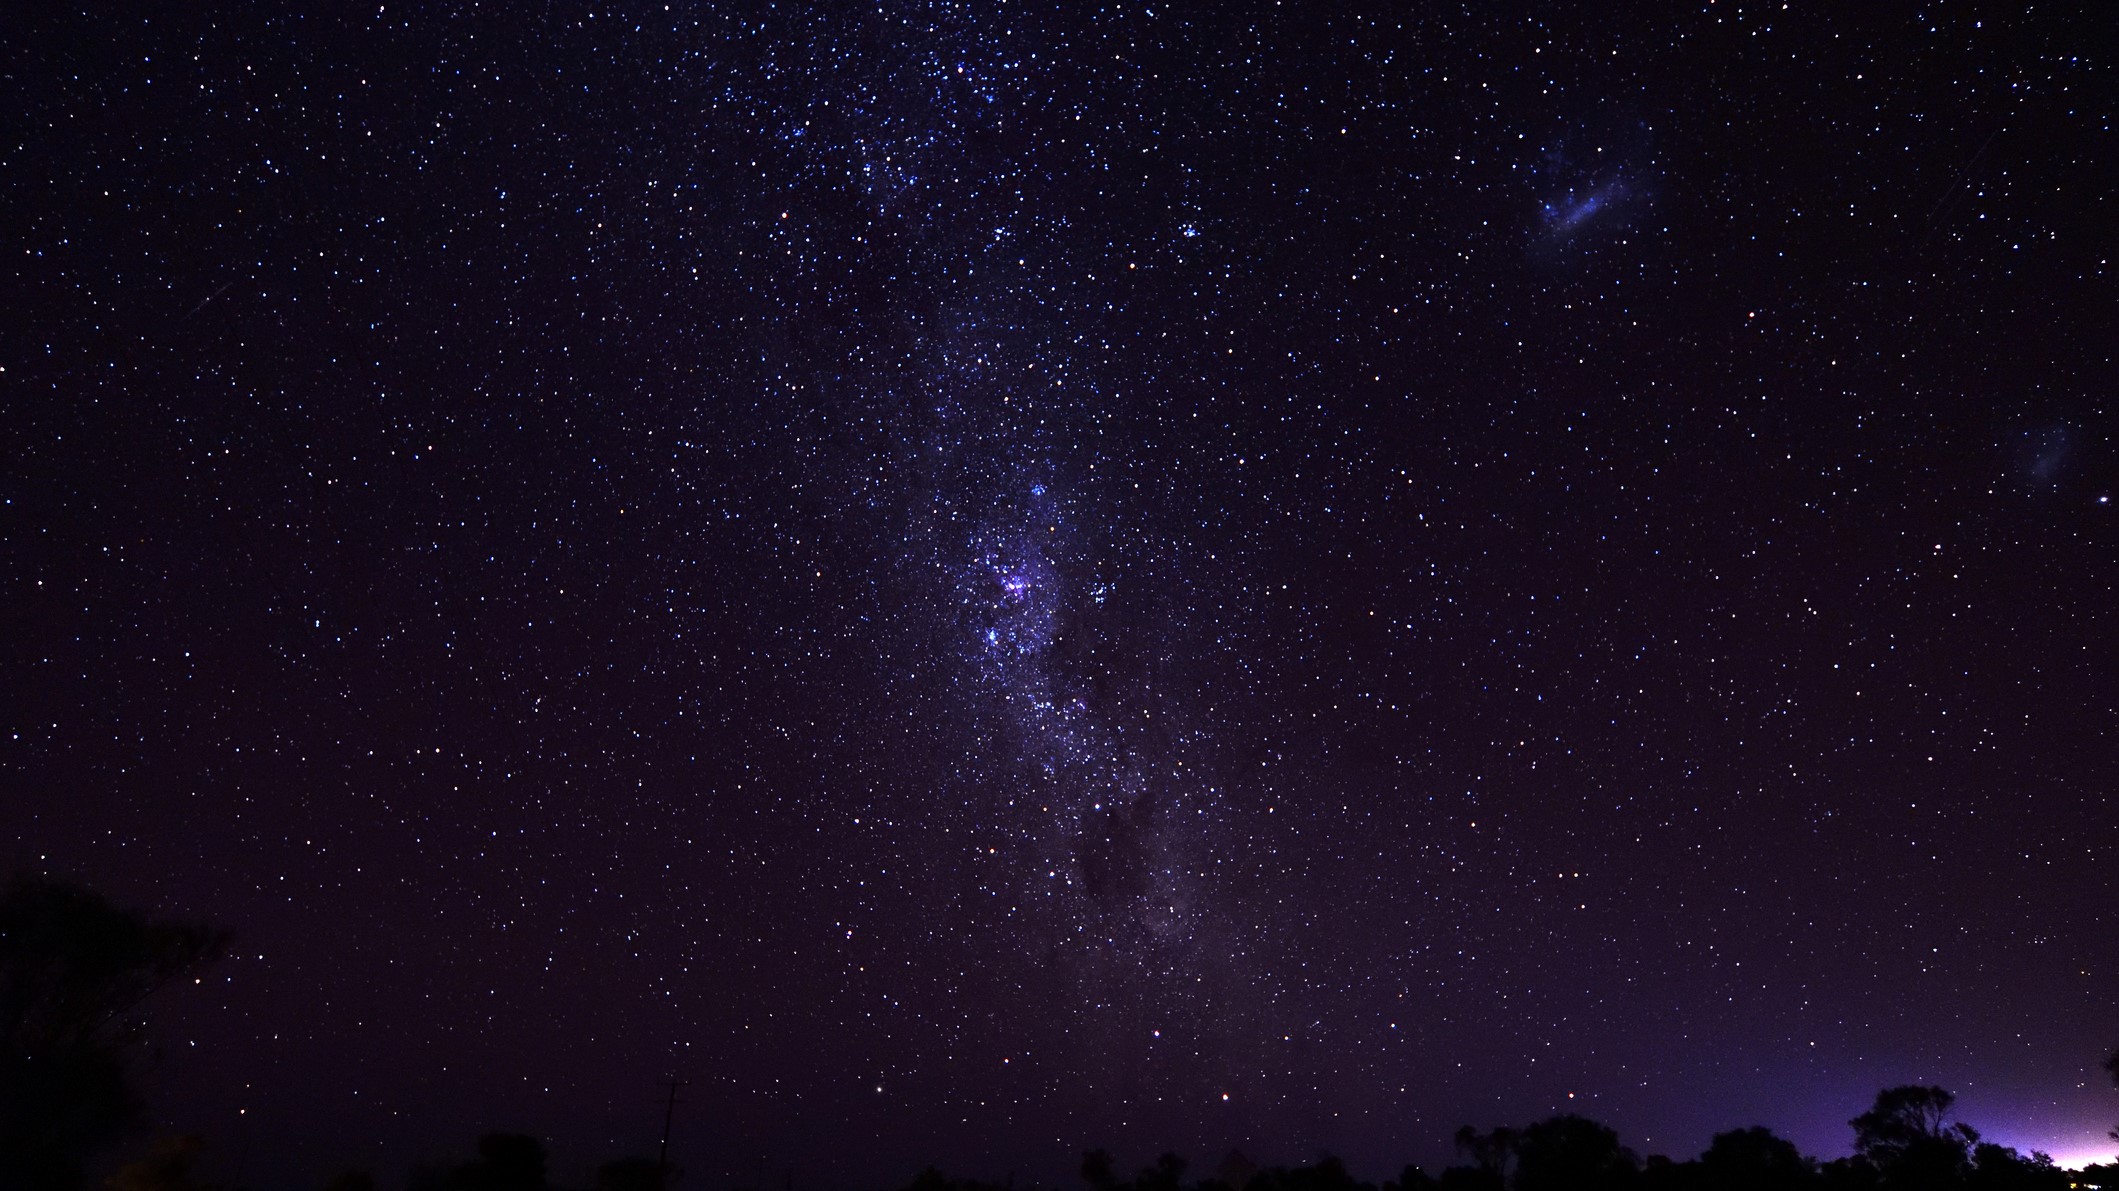 Photograph of the night sky full of stars.